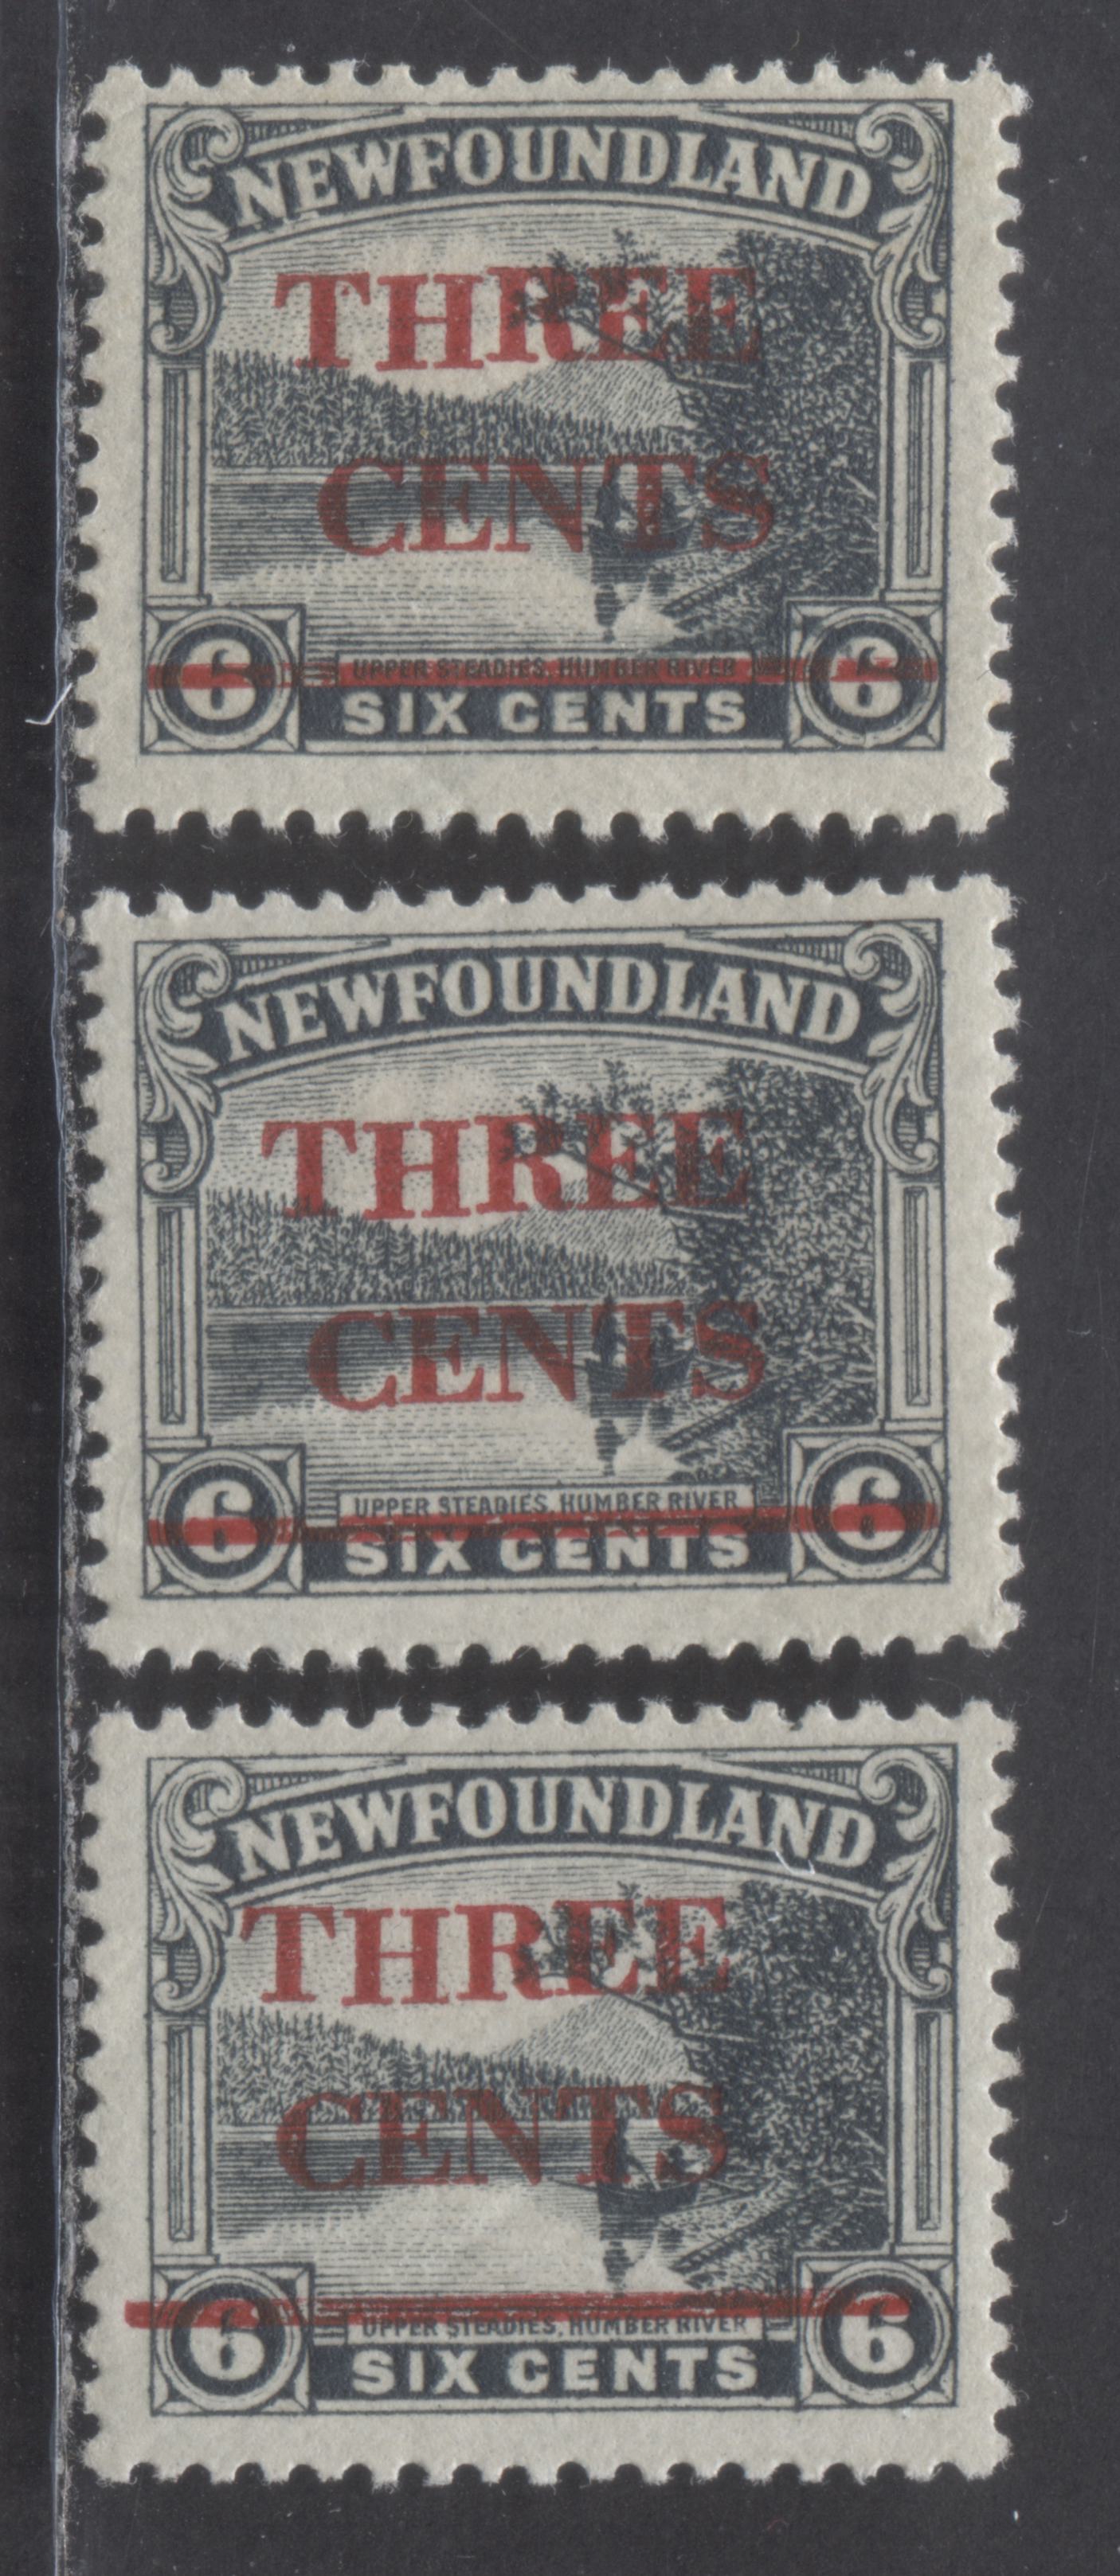 Lot 68 Newfoundland #160 3c On 6c Grey Black Humber River, 1929 Surcharge On 136 Issue, 3 FOG Singles Overprint Varieties